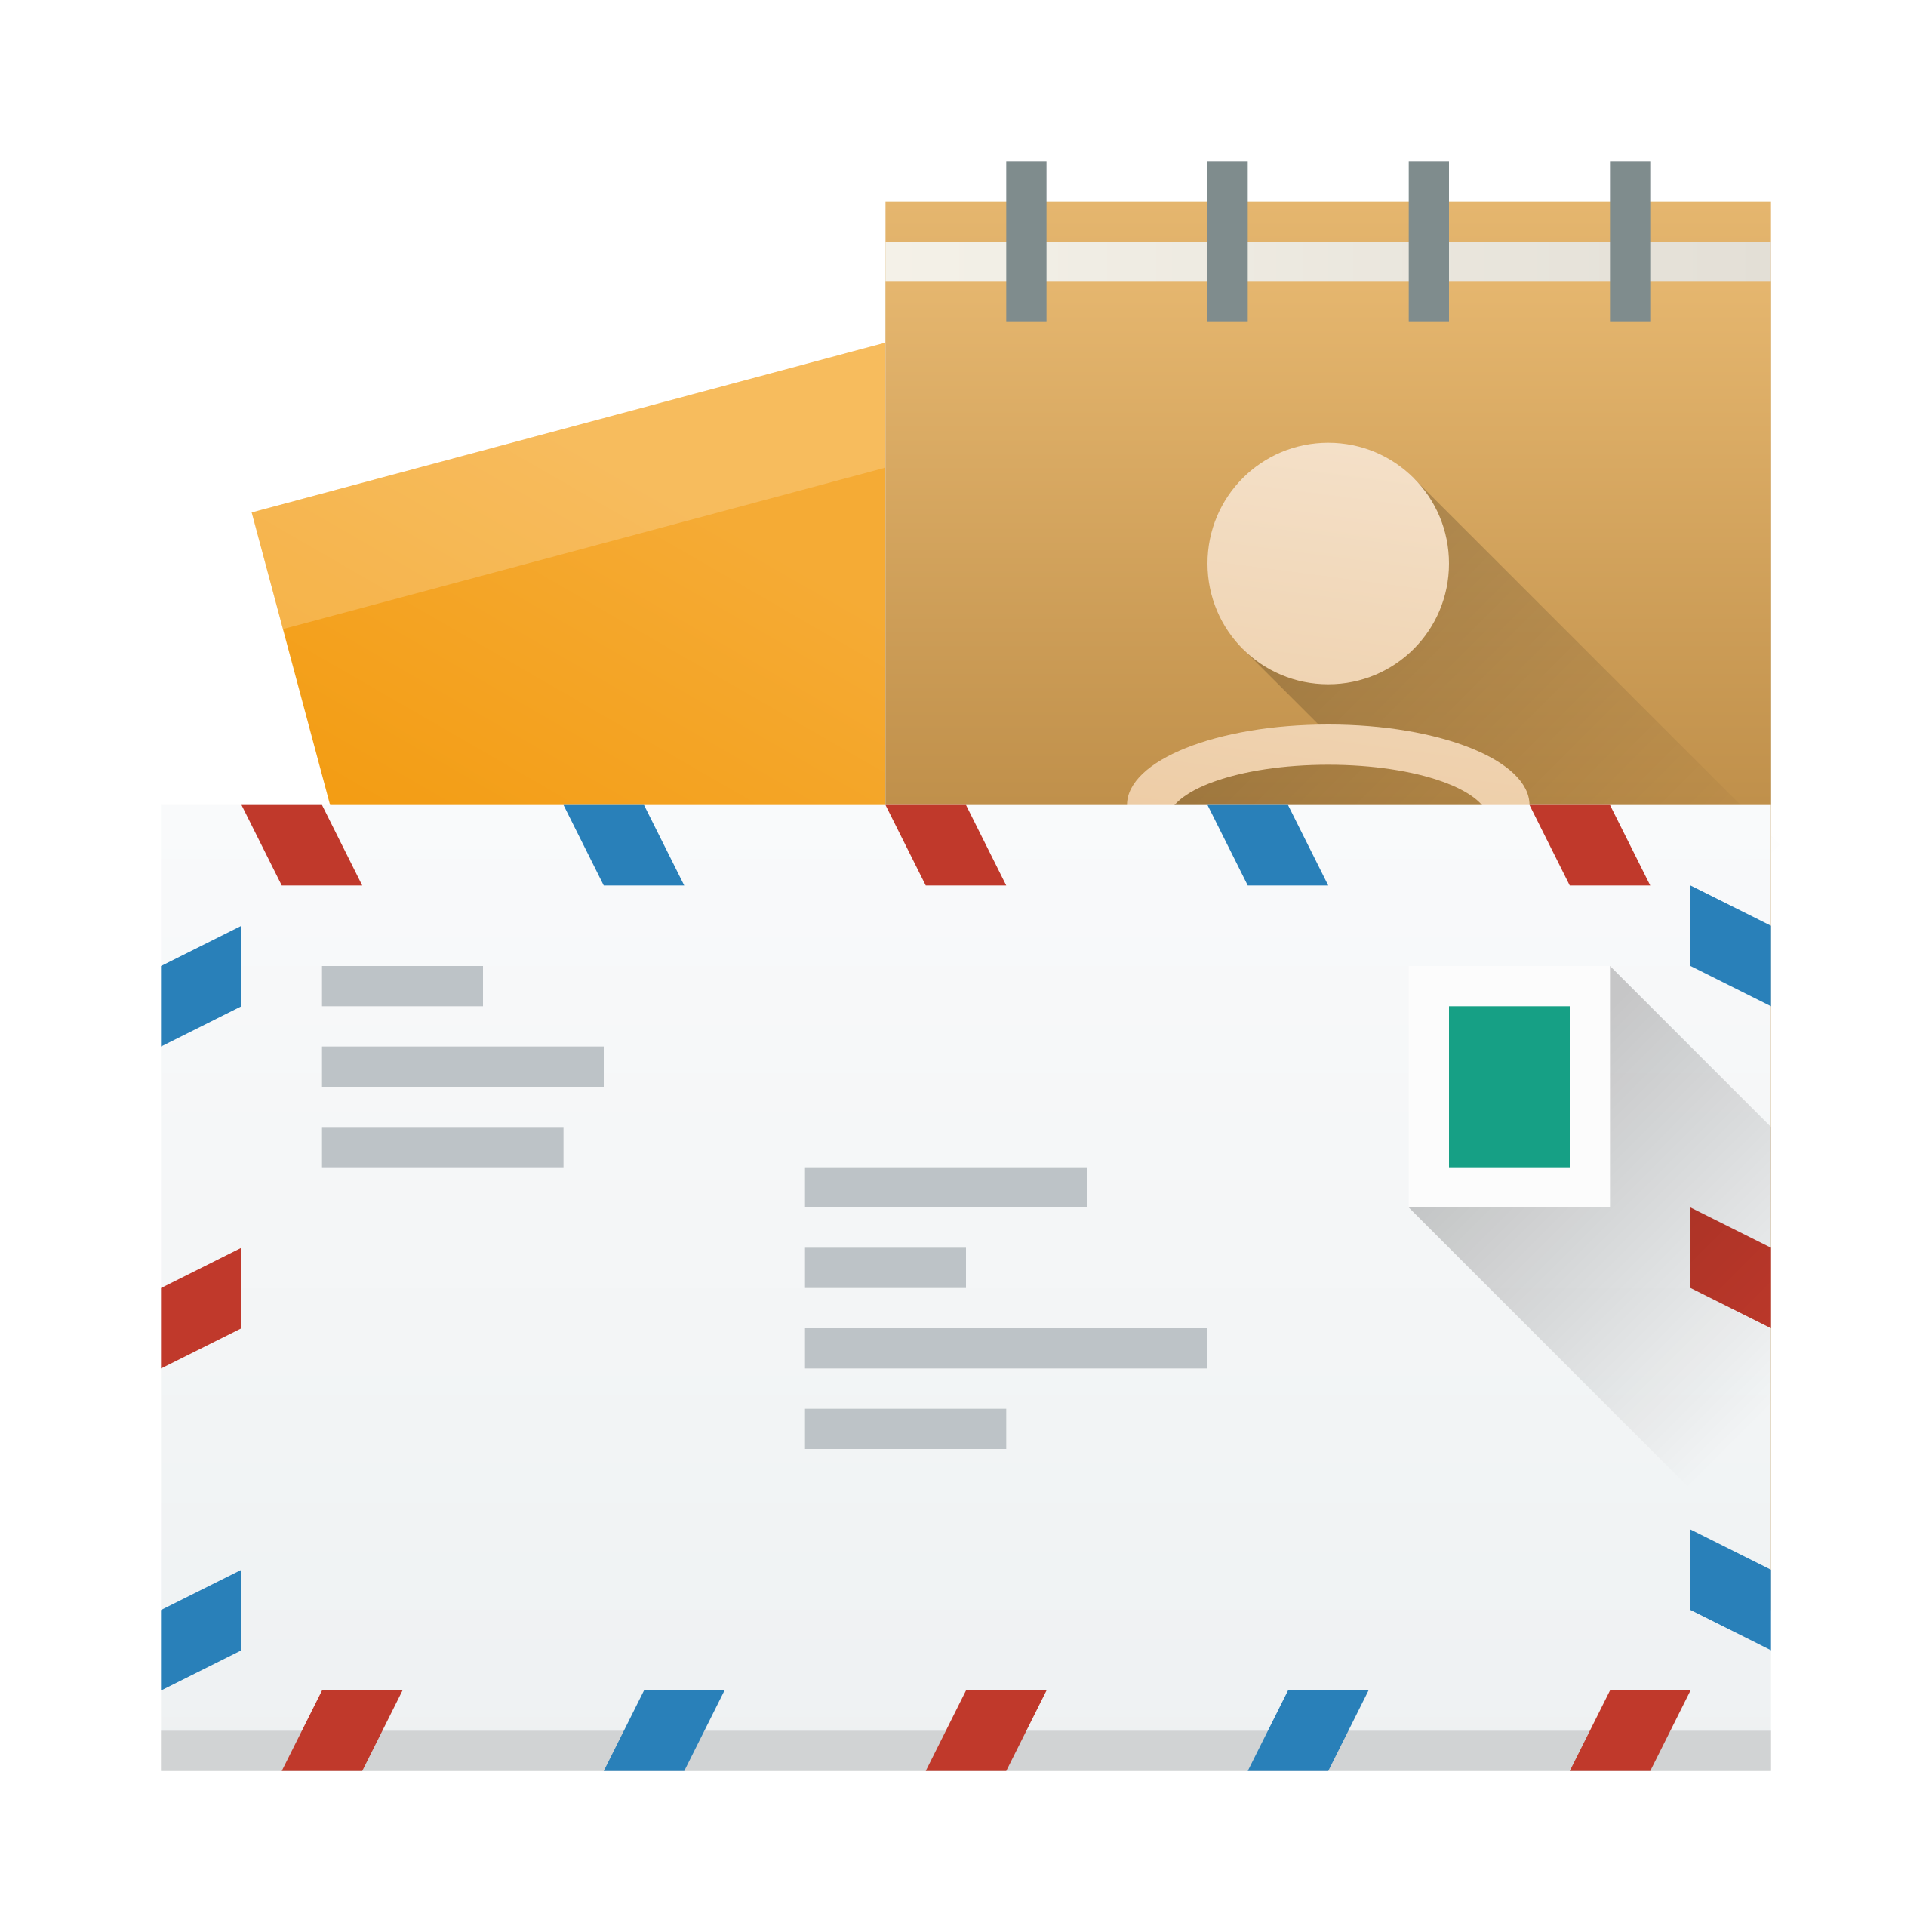 Linux KDE PIM - KDE Personal Information Management - Kontact